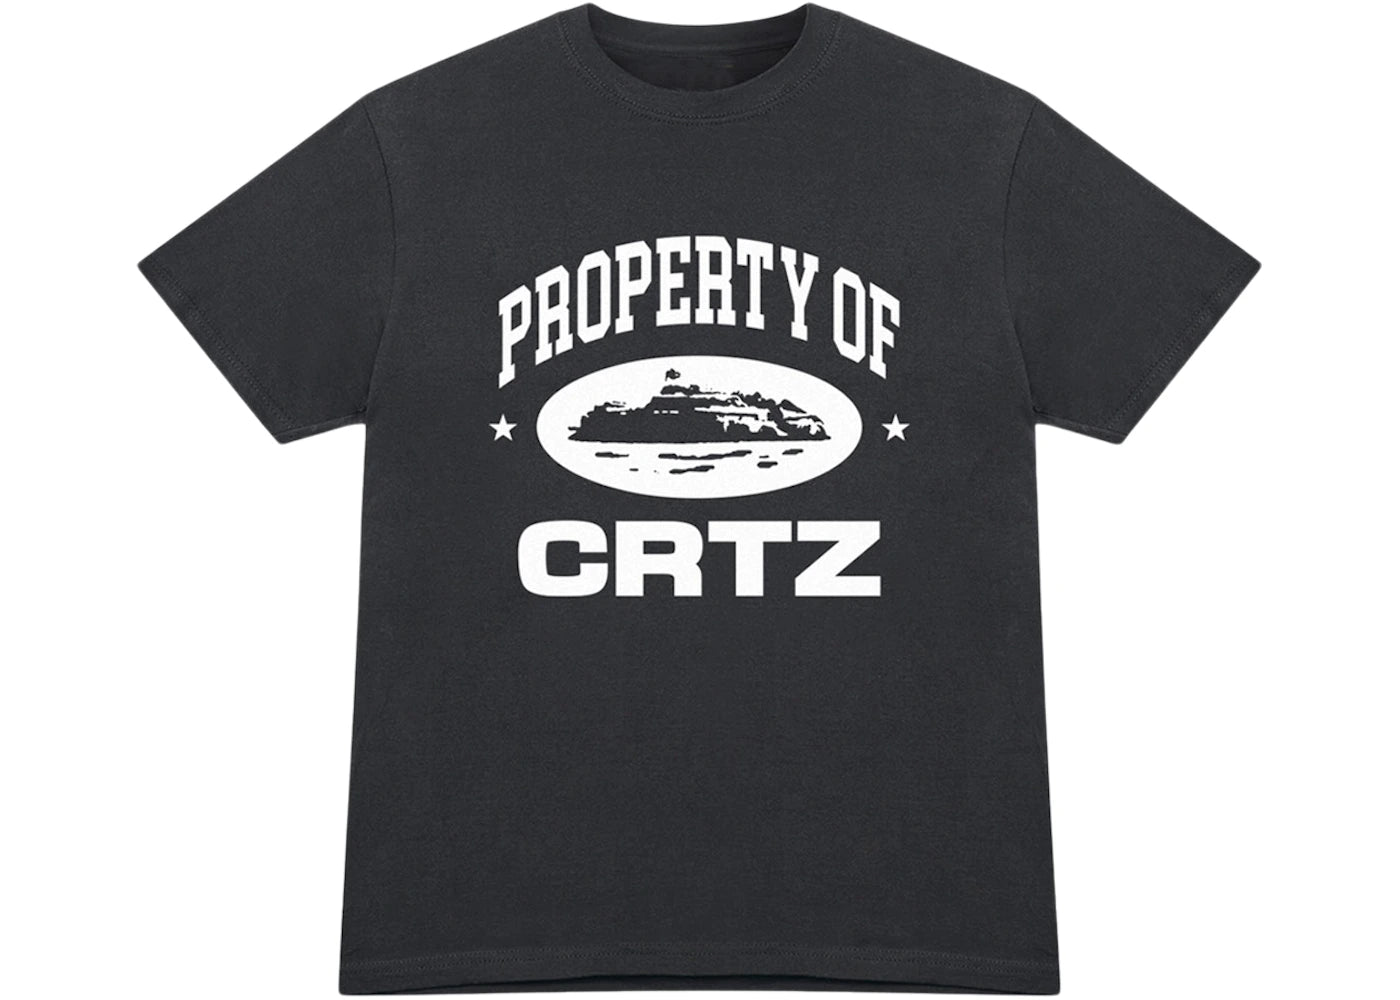 Alcatraz T-Shirt - Black